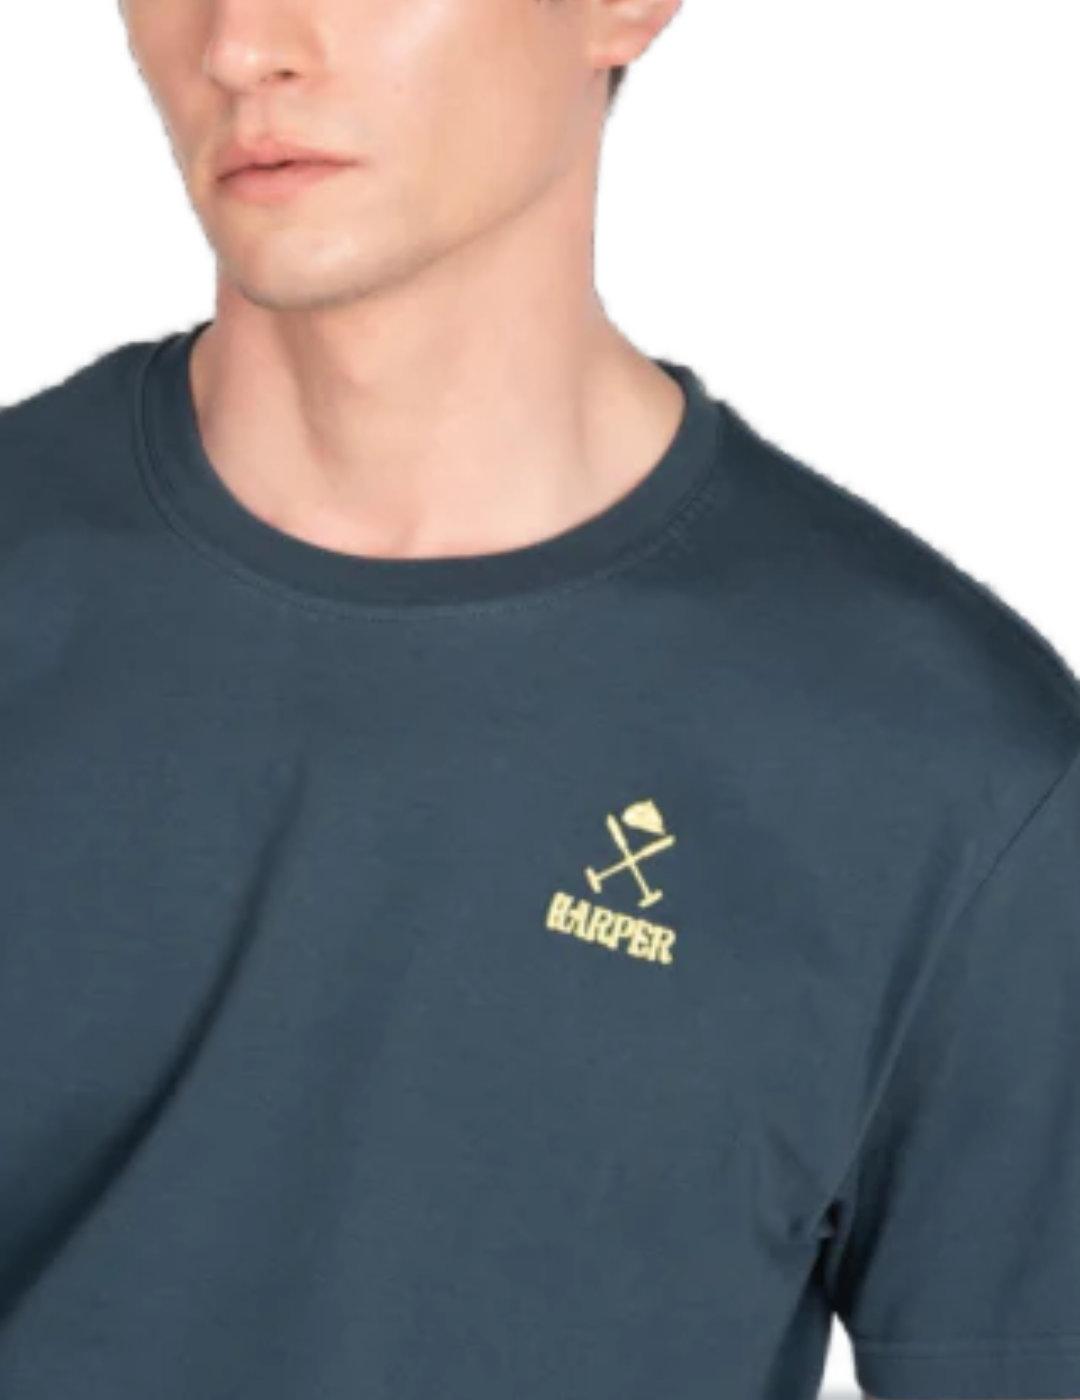 Camiseta Harper Waves marino manga corta para hombre